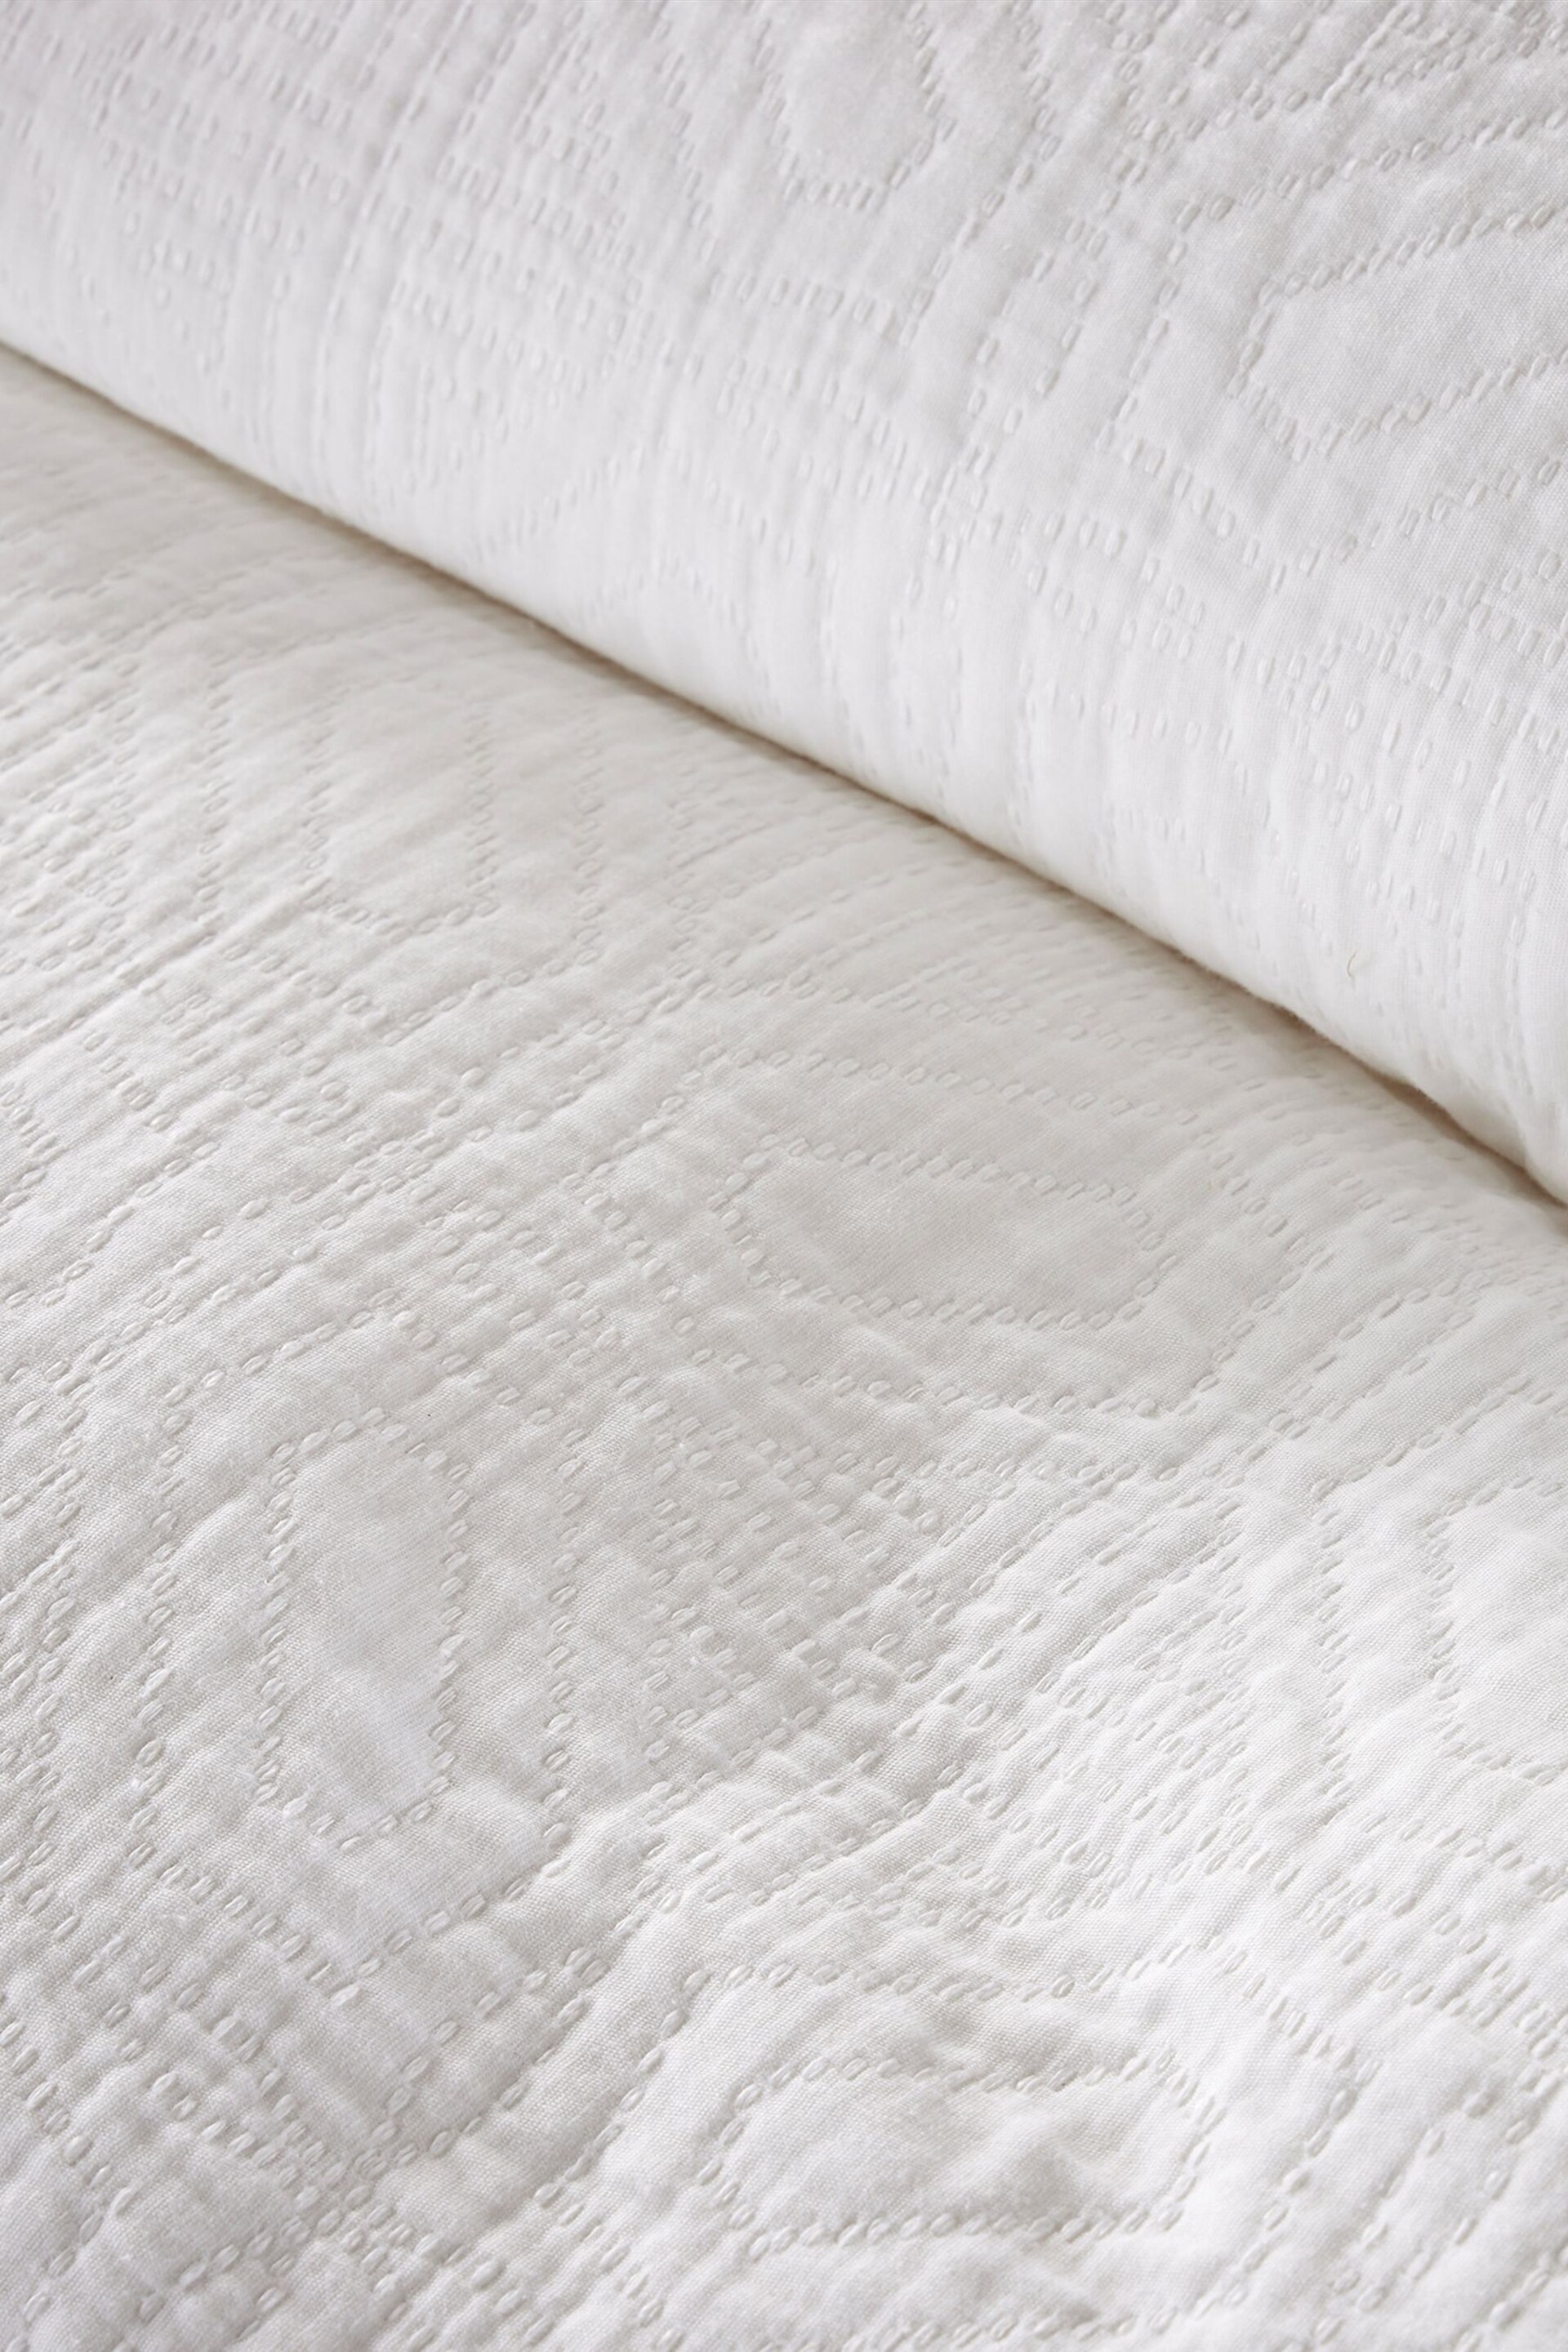 Vantona White Luna Matalesse Duvet Cover and Pillowcase Set - Image 3 of 4